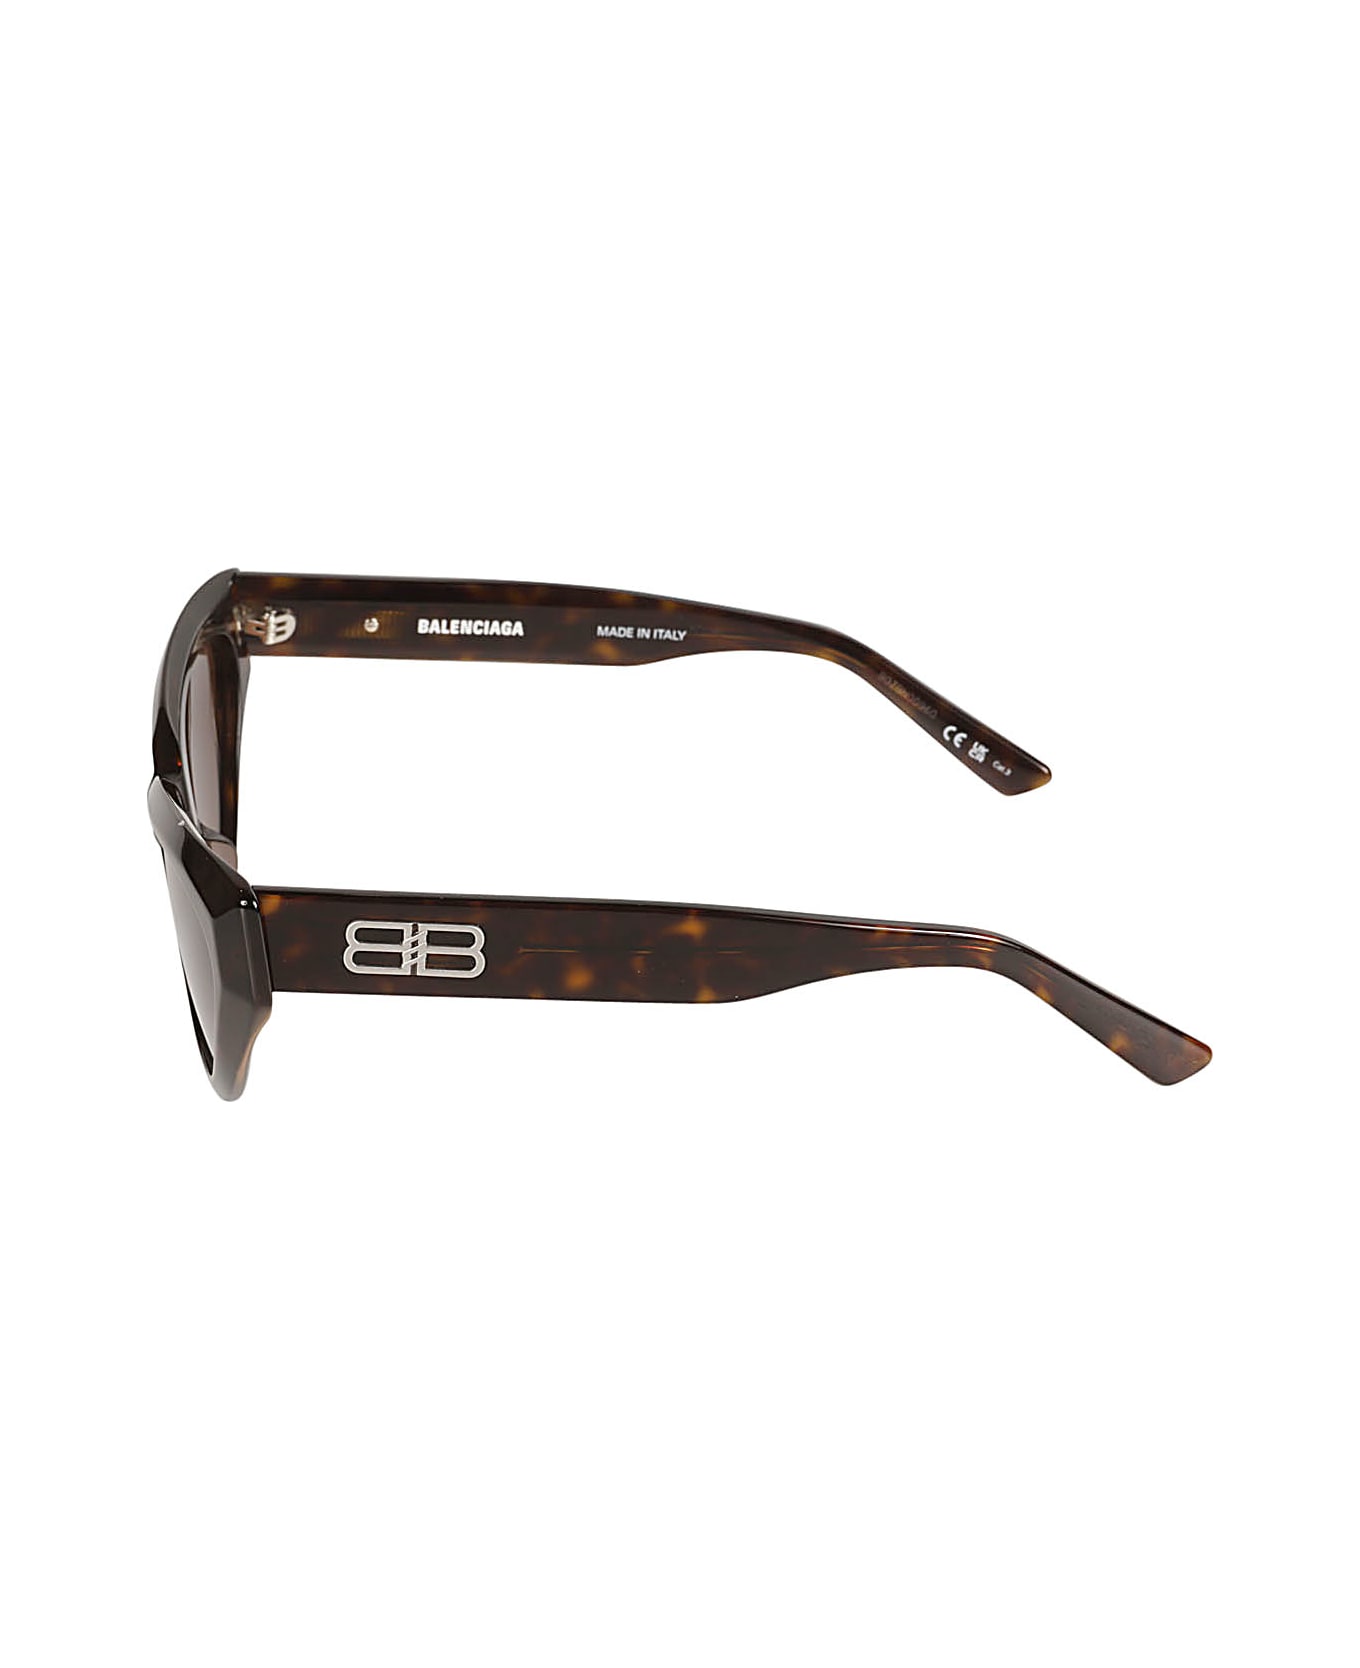 Balenciaga Eyewear Bb Plaque Cat Eye Frame Sunglasses - Havana/Brown